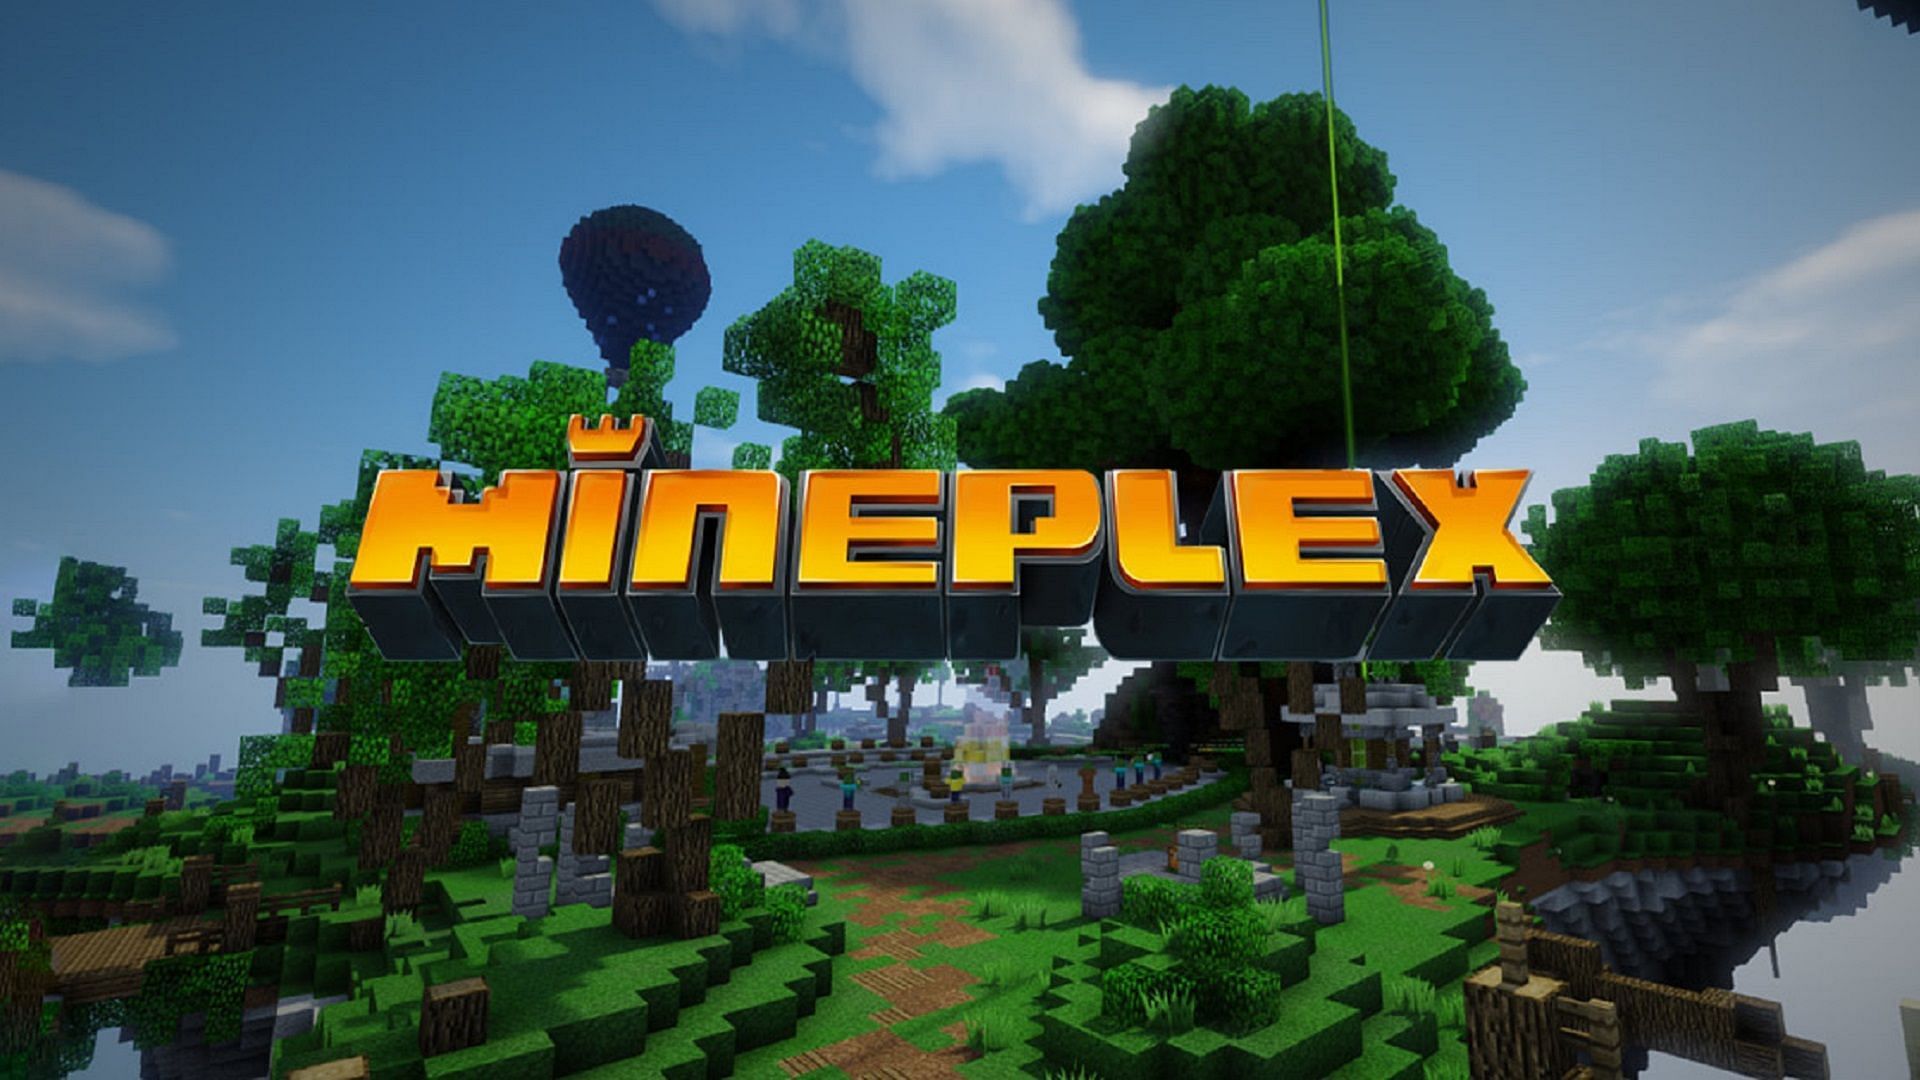 Mineplex is one of the few Minecraft Bedrock servers partnered with Mojang and Microsoft (Image via Mineplex)